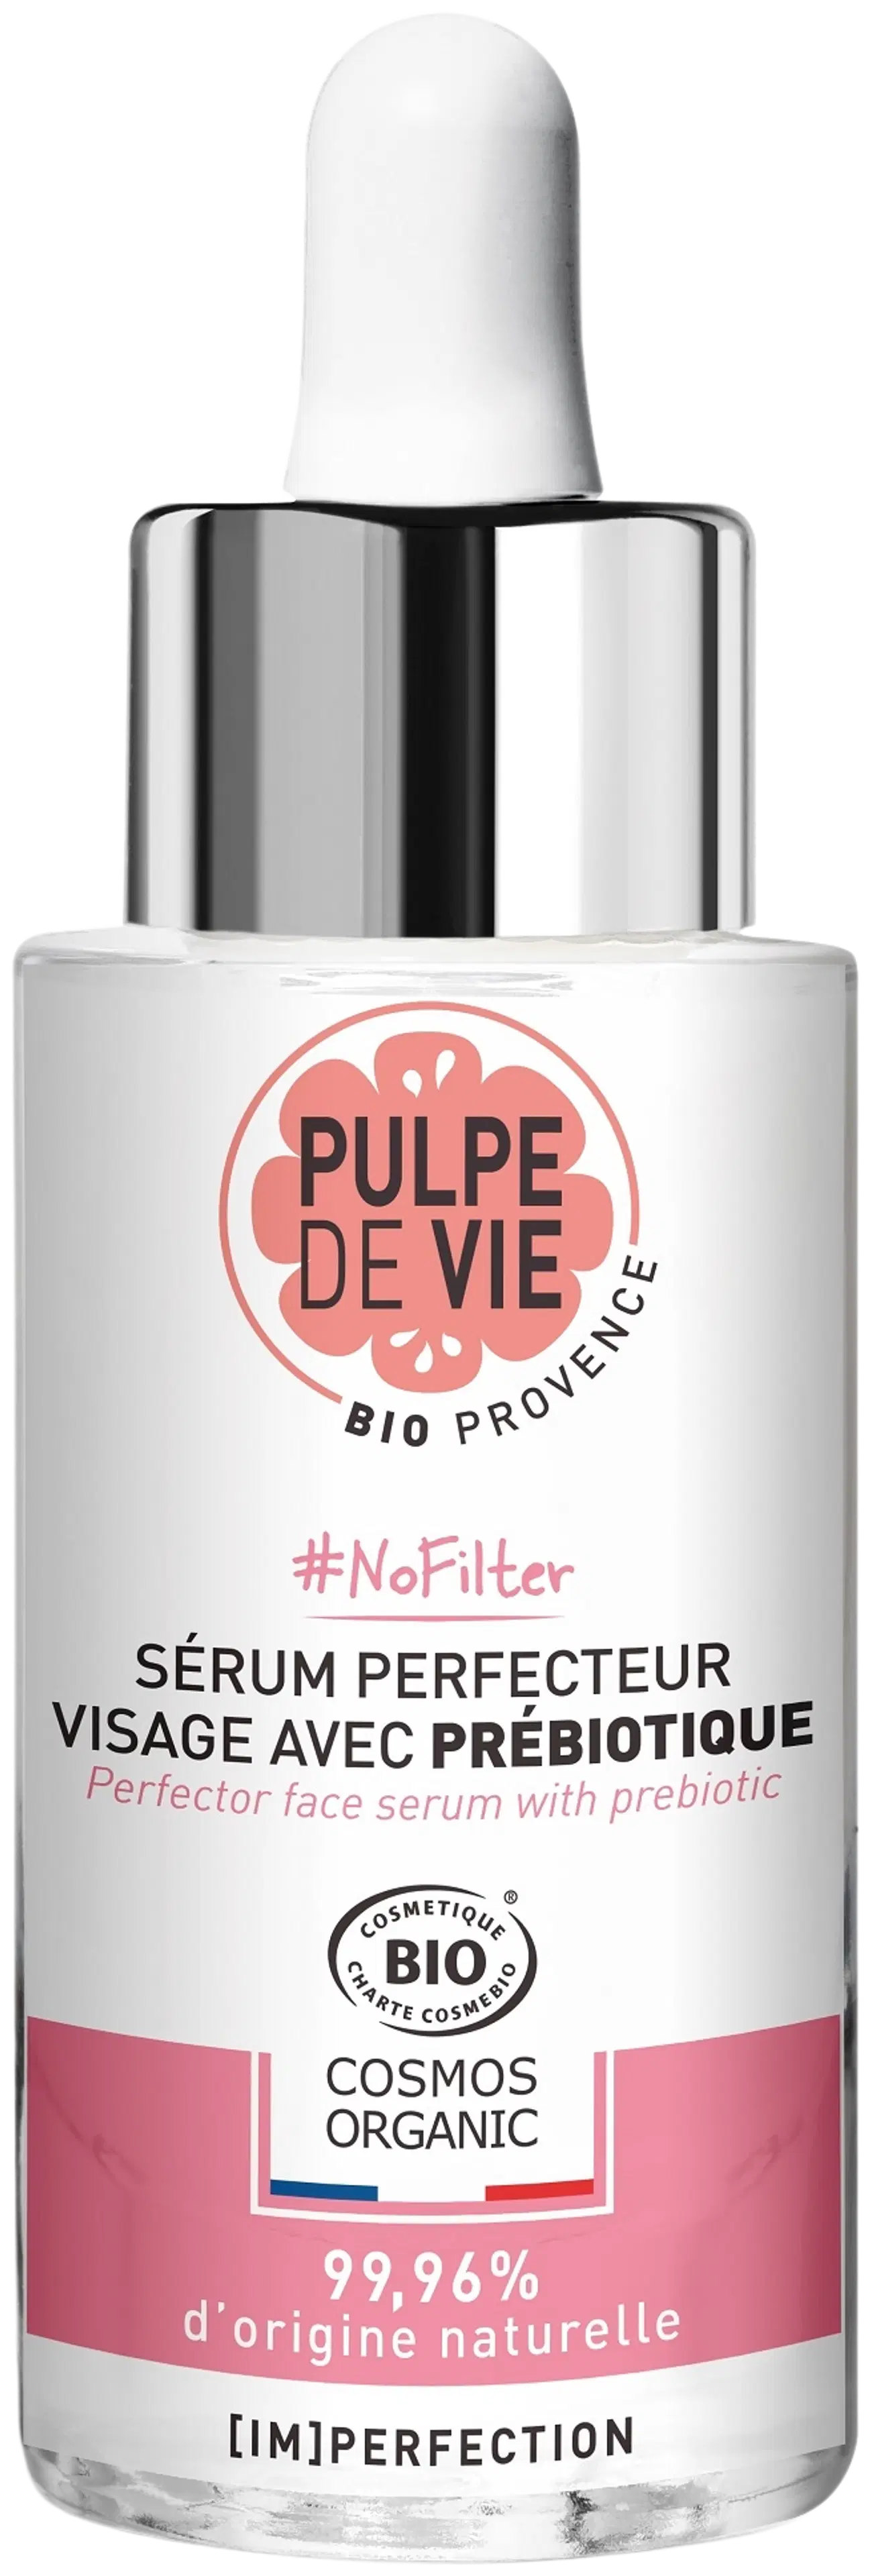 Pulpe De Vie No Filter prebioottinen kasvoseerumi 30ml